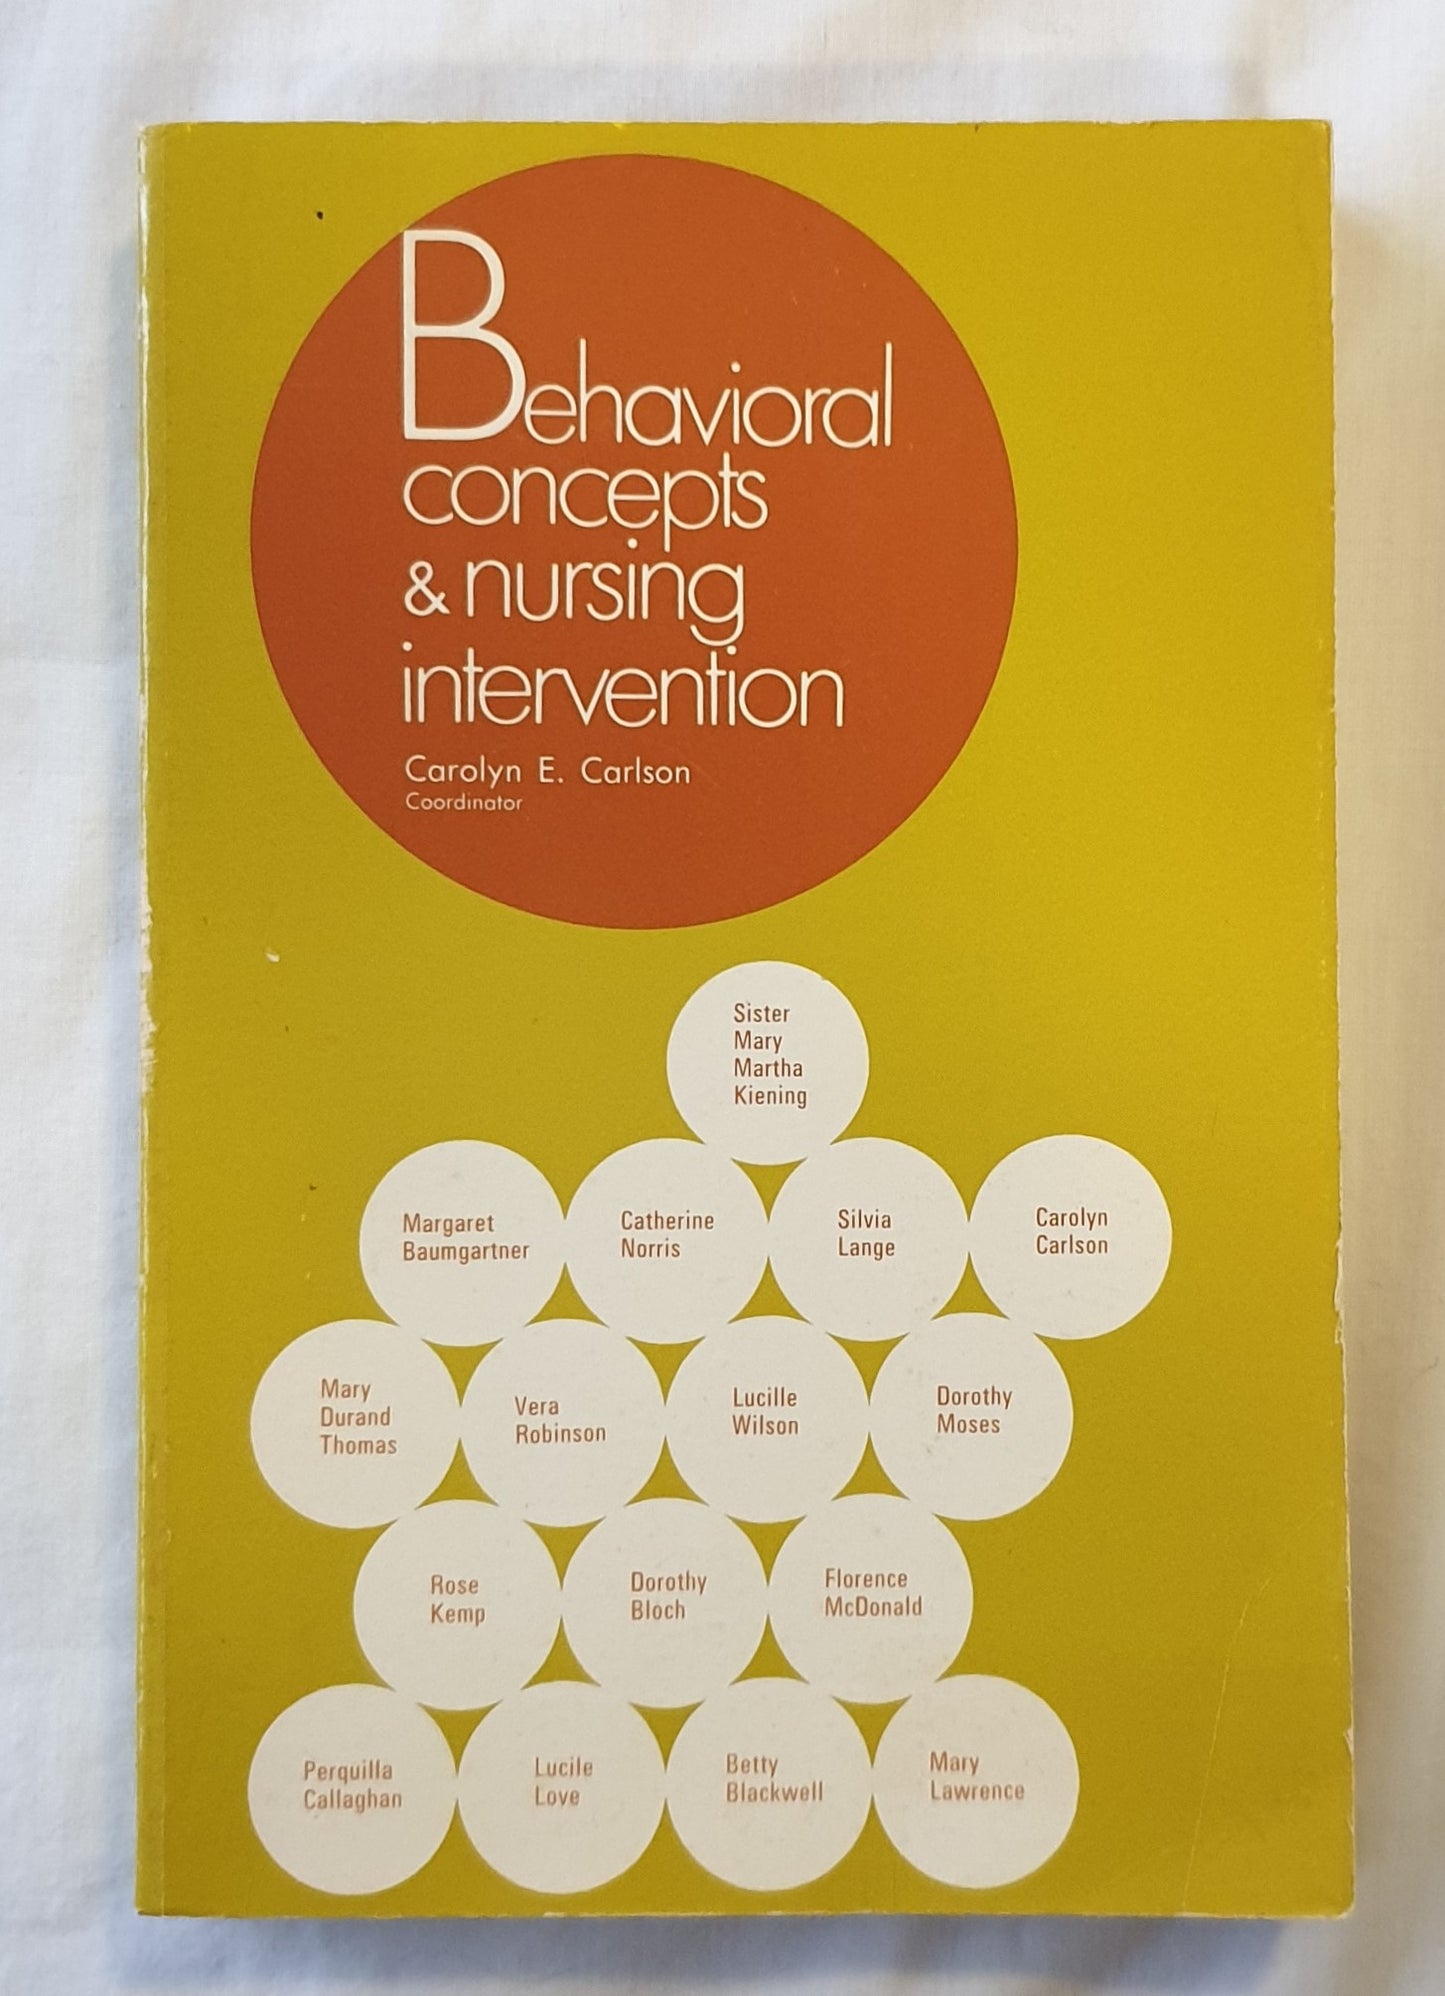 Behavioral Concepts & Nursing Intervention by Carolyn E. Carlson